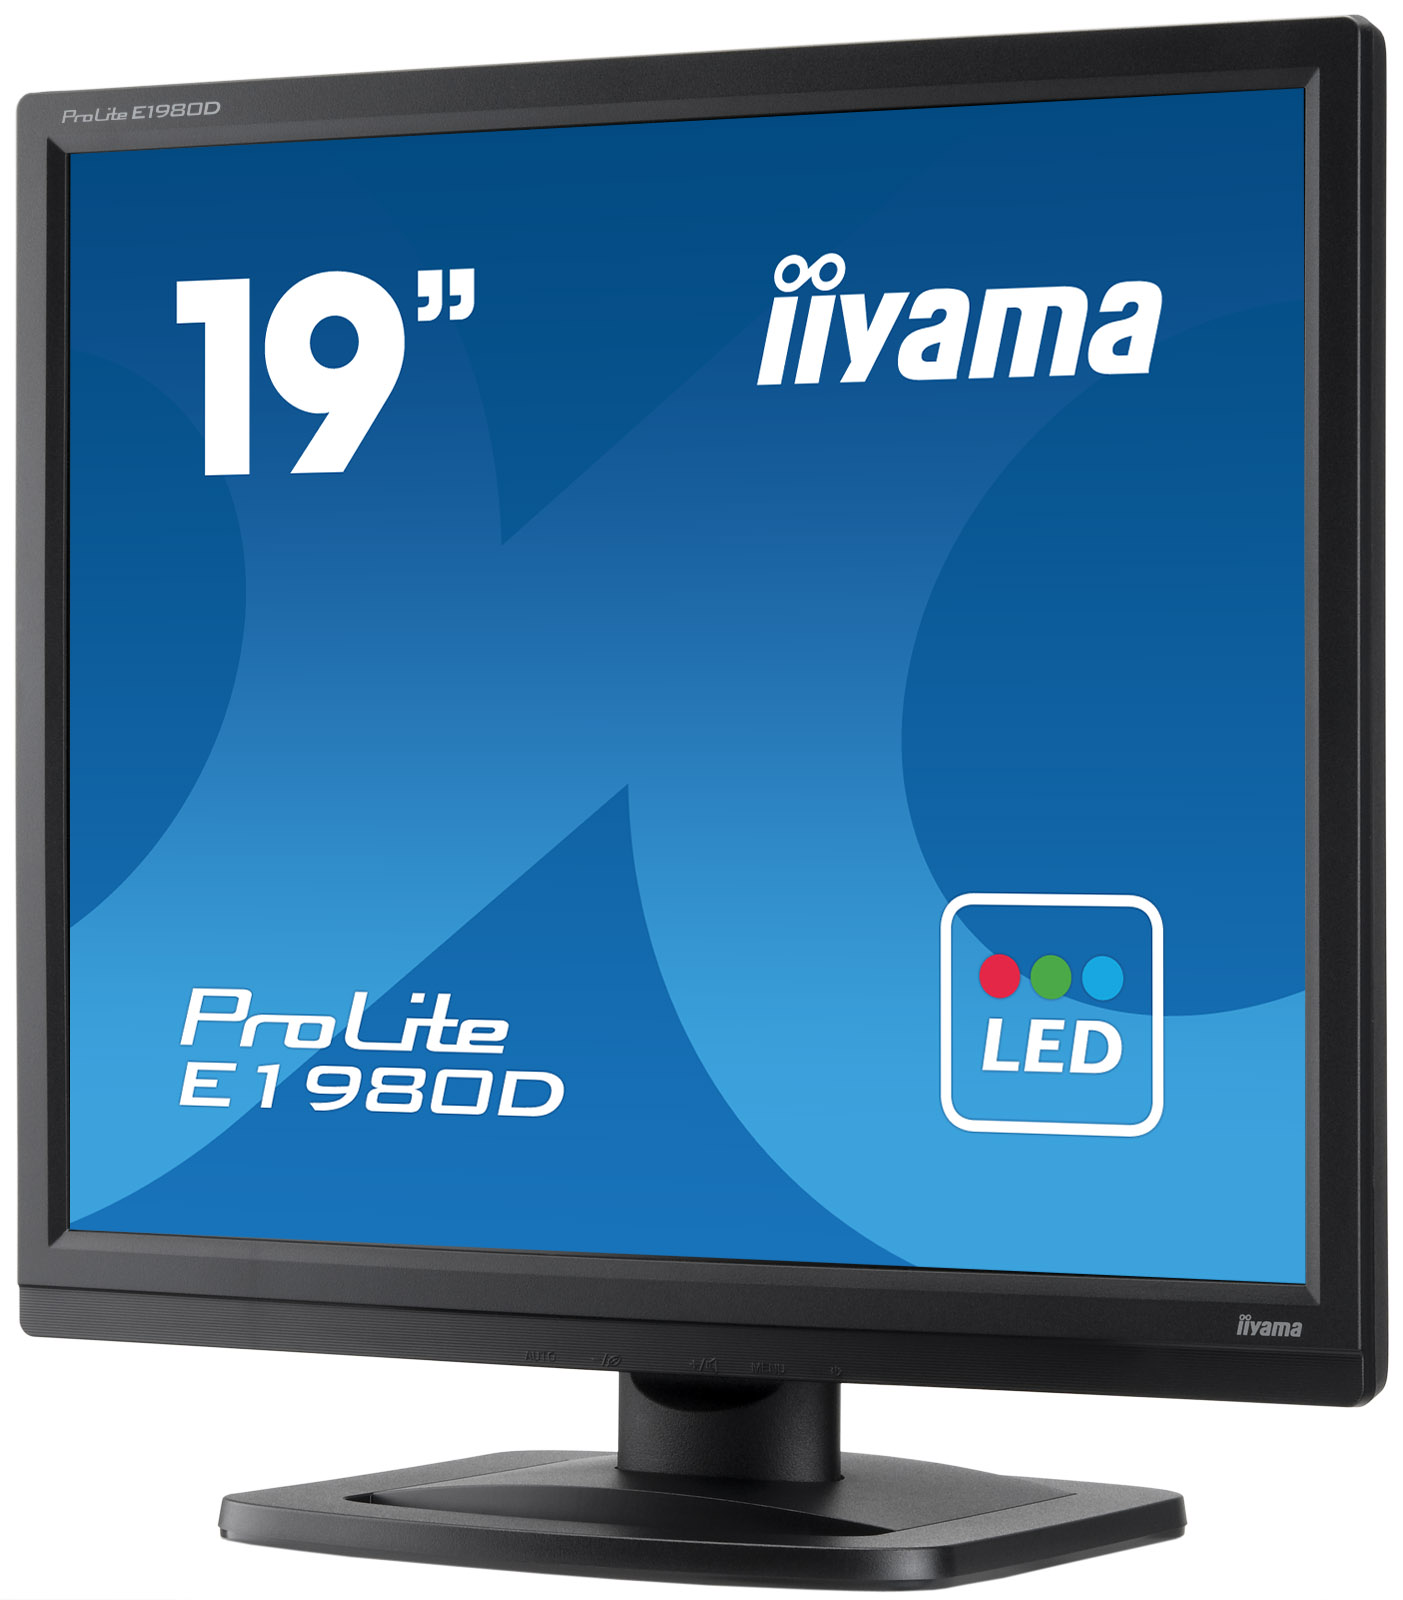 19" LCD iiyama ProLite E1980D-B1 - 5ms, DVI, TN 